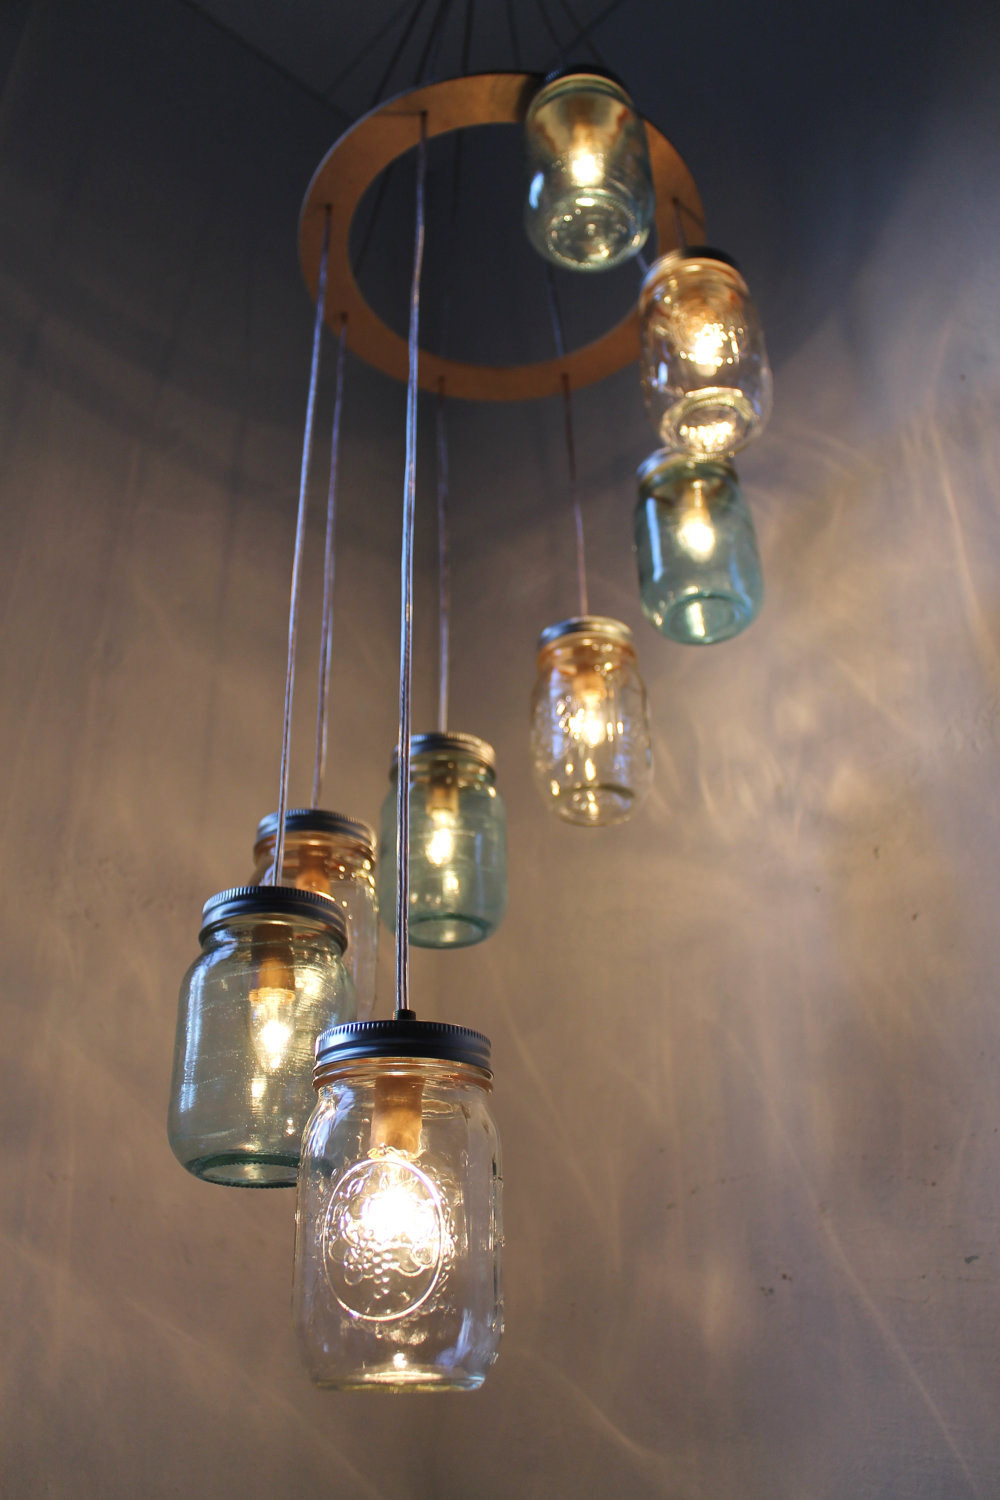 Best ideas about Mason Jar Lighting
. Save or Pin Mason Jar Lights Now.